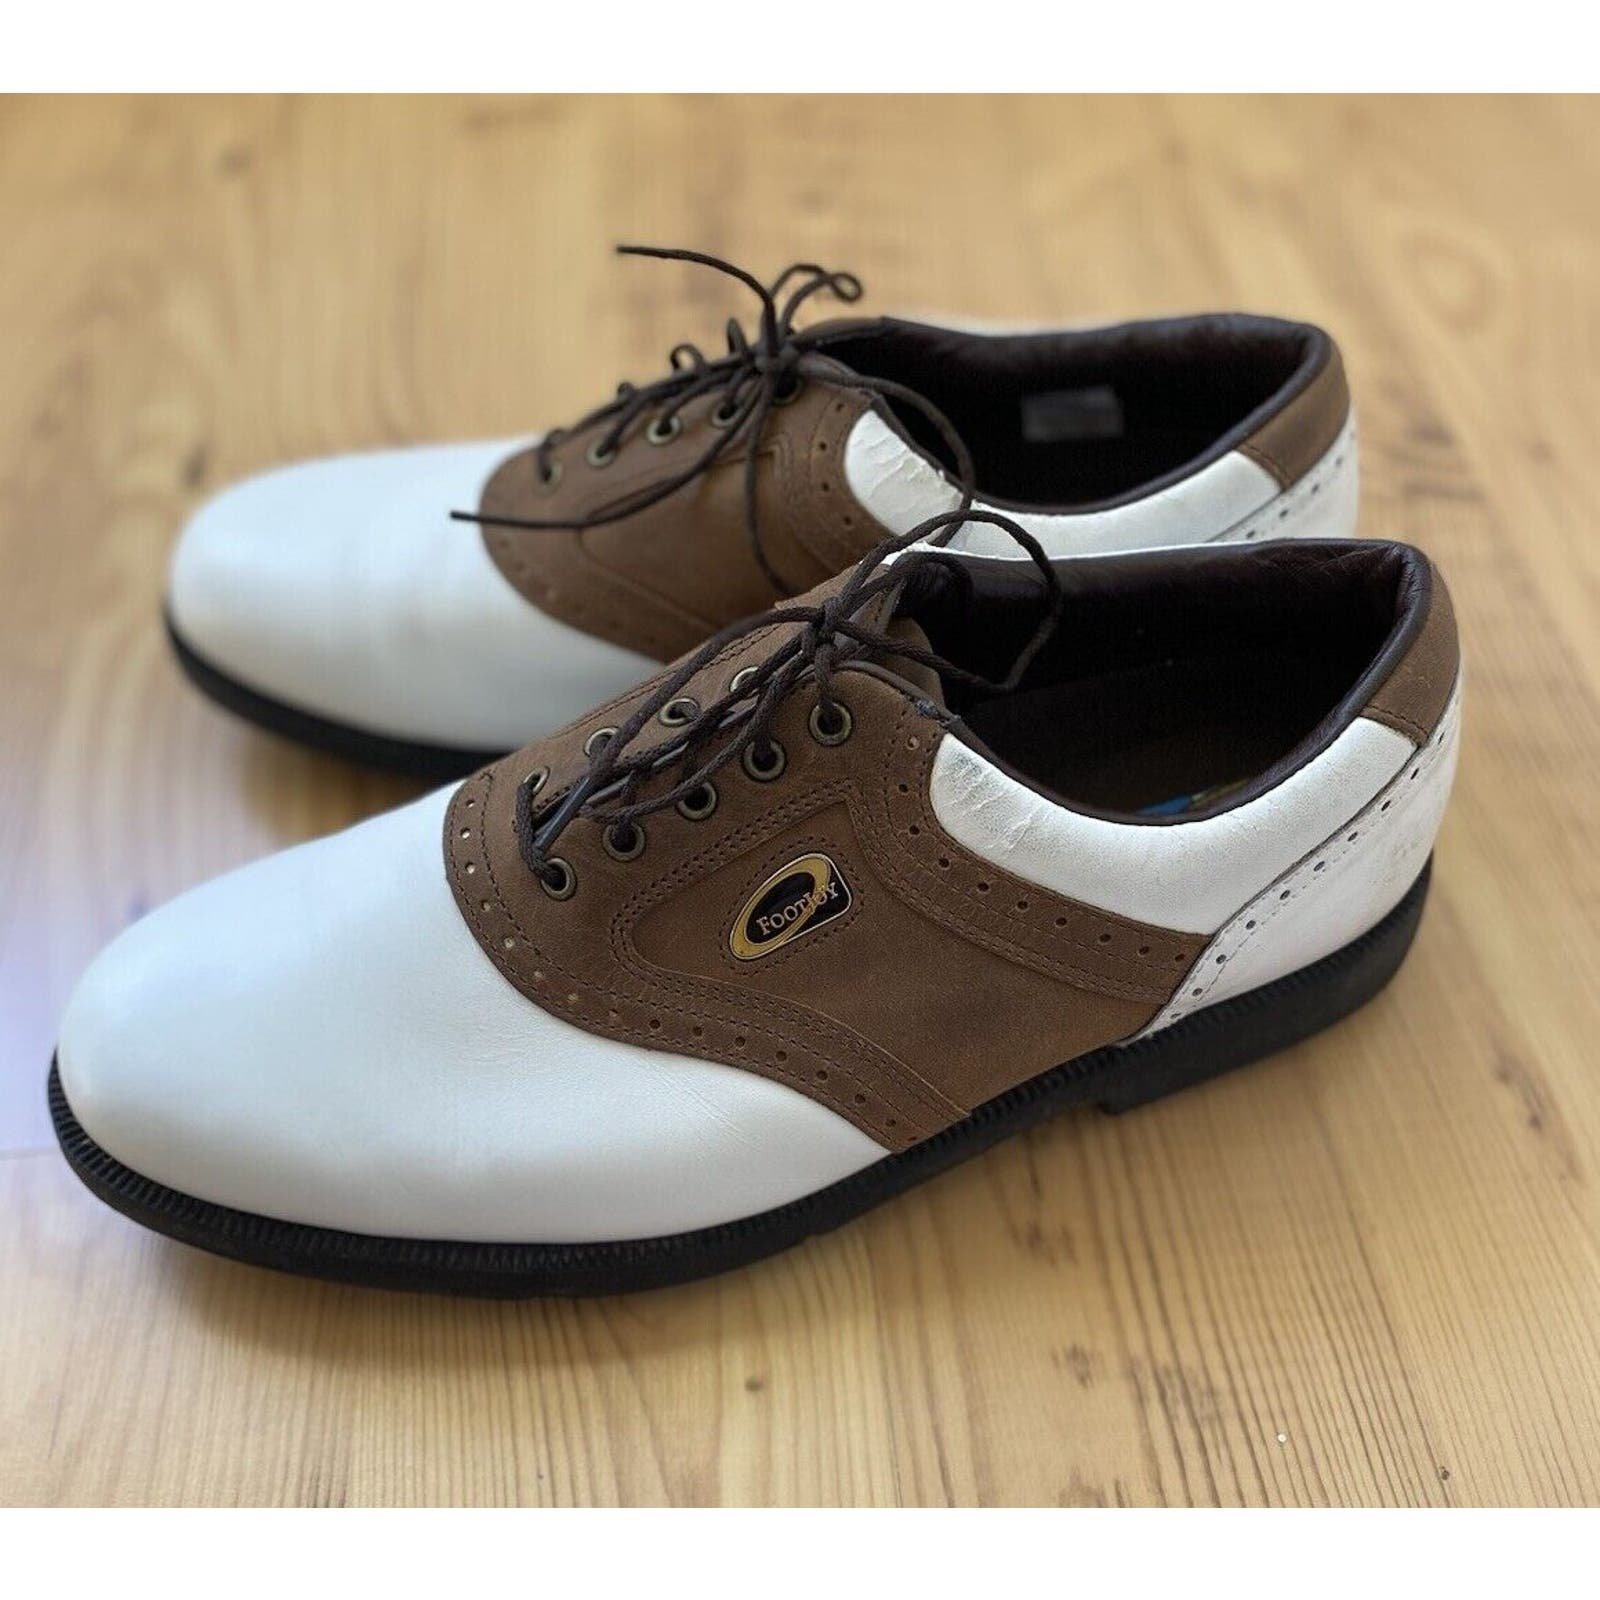 Mens Foot Joy Spiked Golf Shoes Sierra Treks Soft Joys (With Bags)- Sz 9 GIsDrGt8K